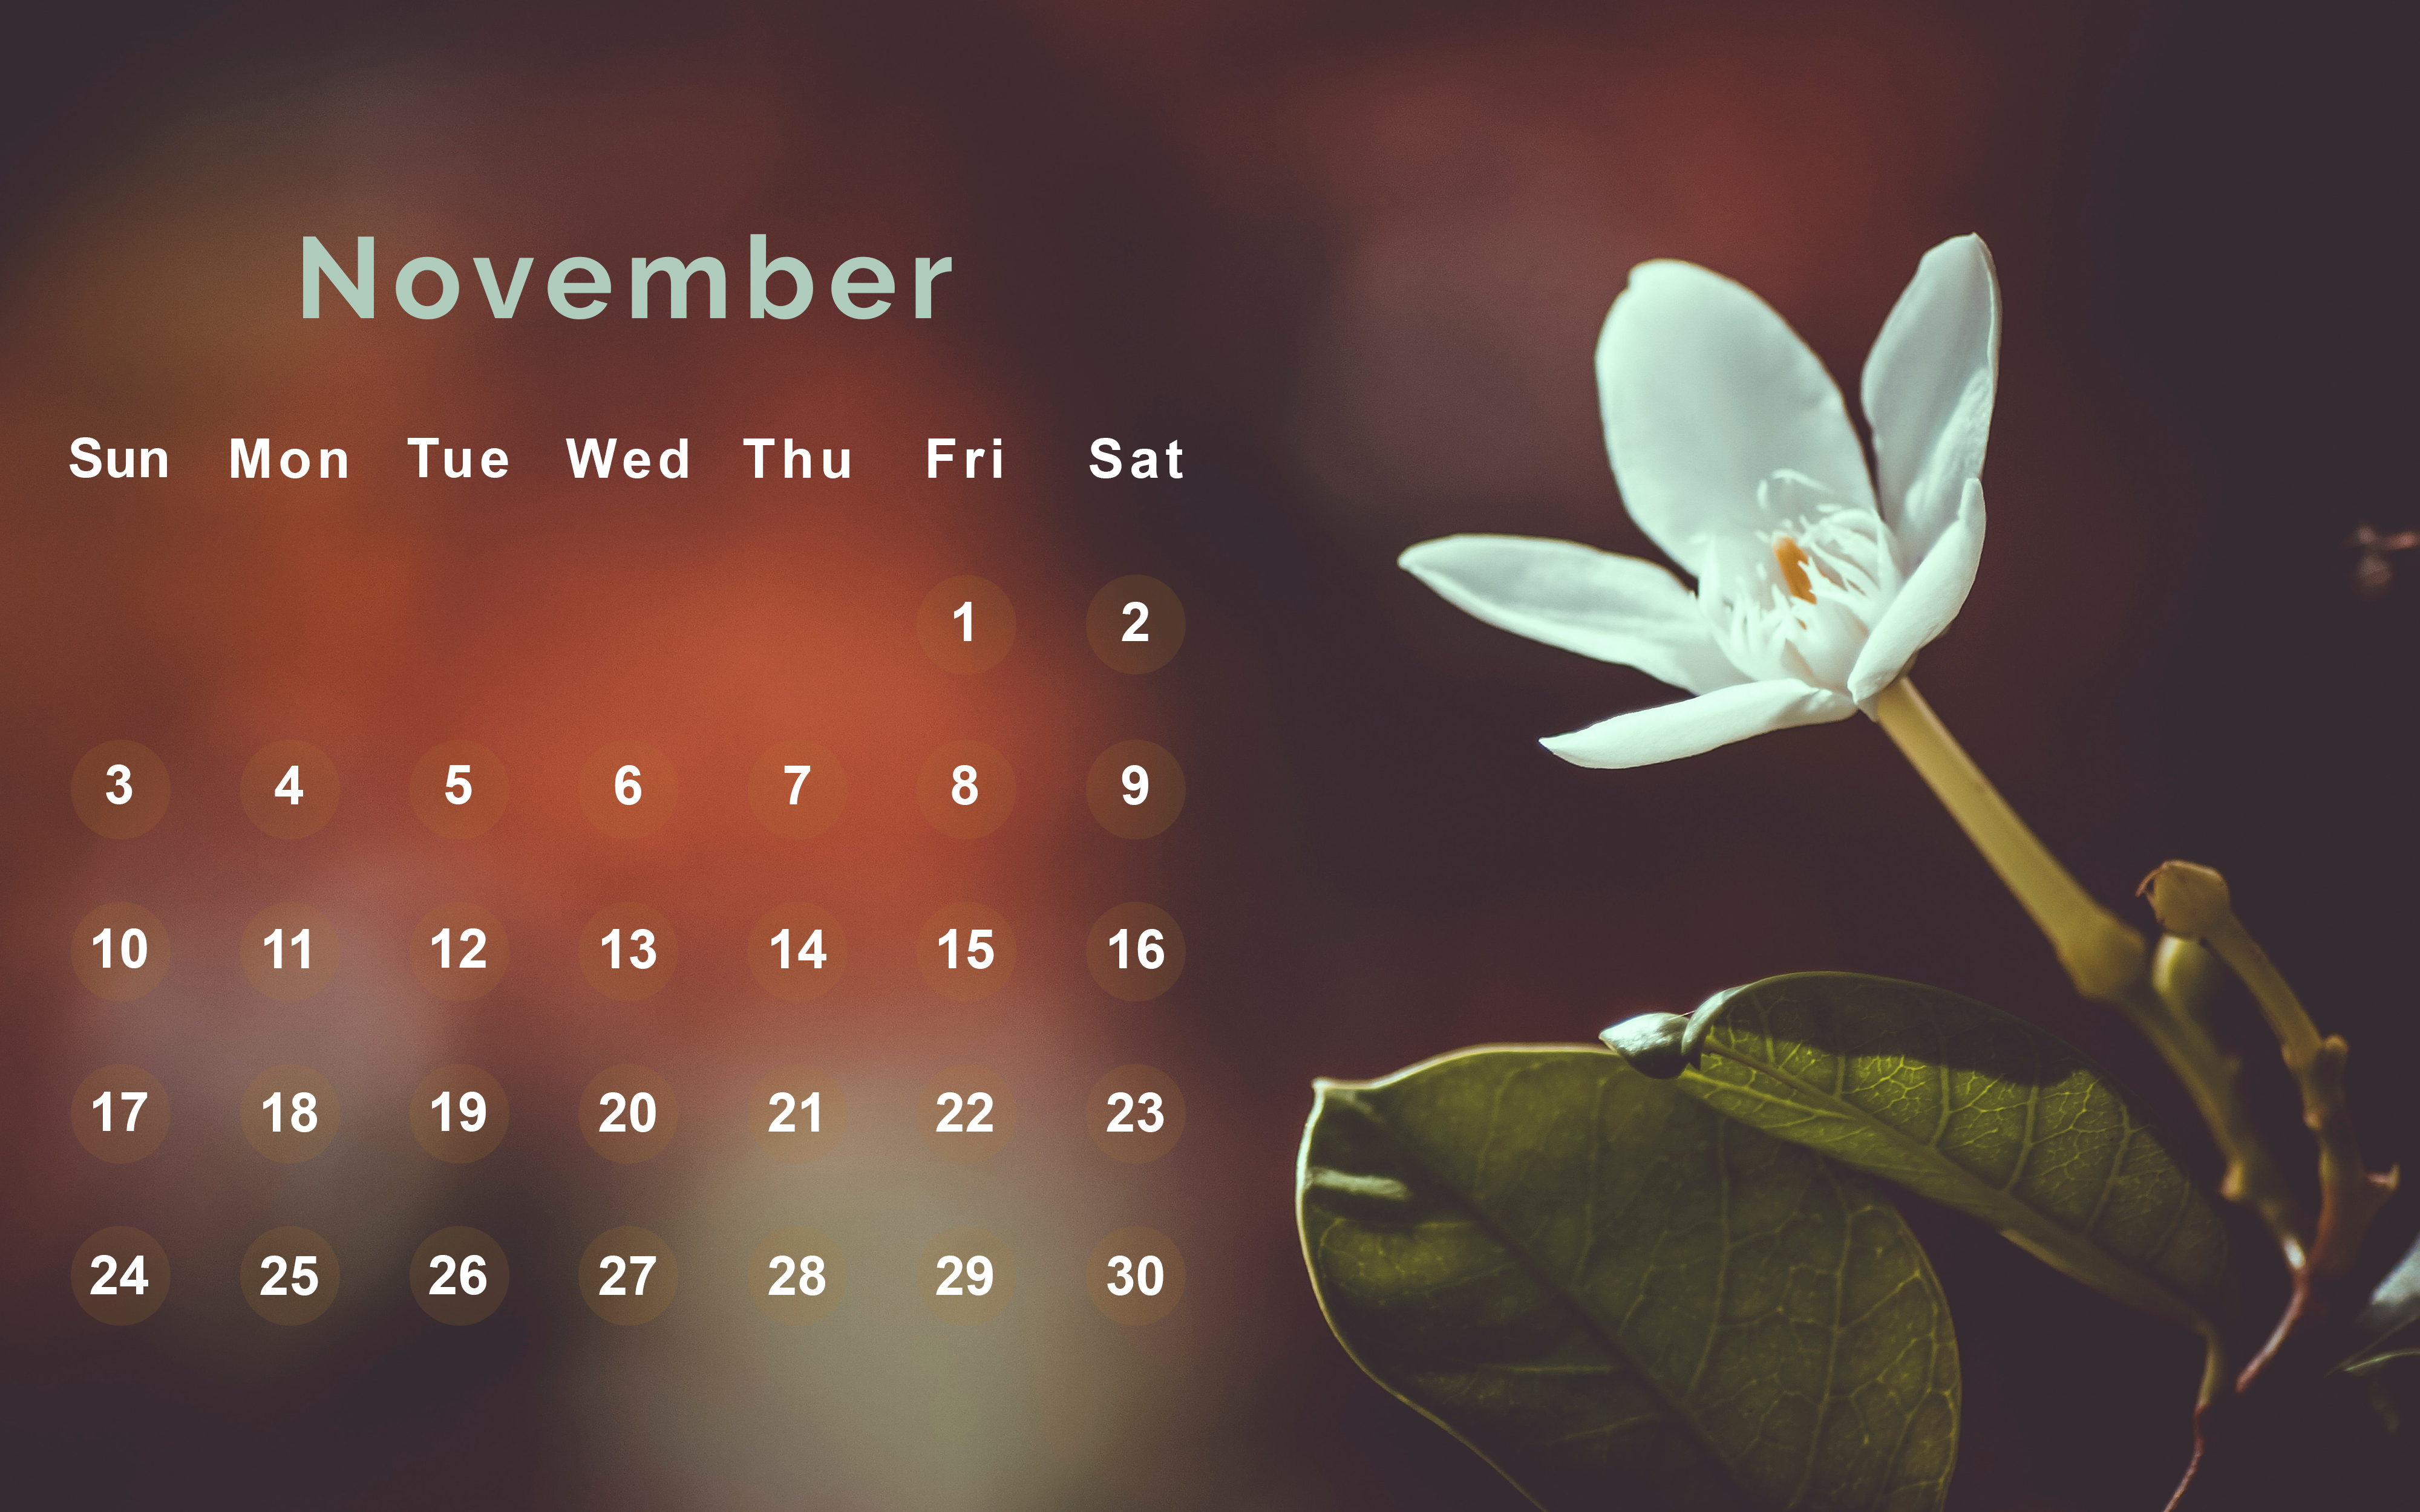 November 2019 Hd Desktop Wallpaper - November 2019 Desktop Calendar - HD Wallpaper 